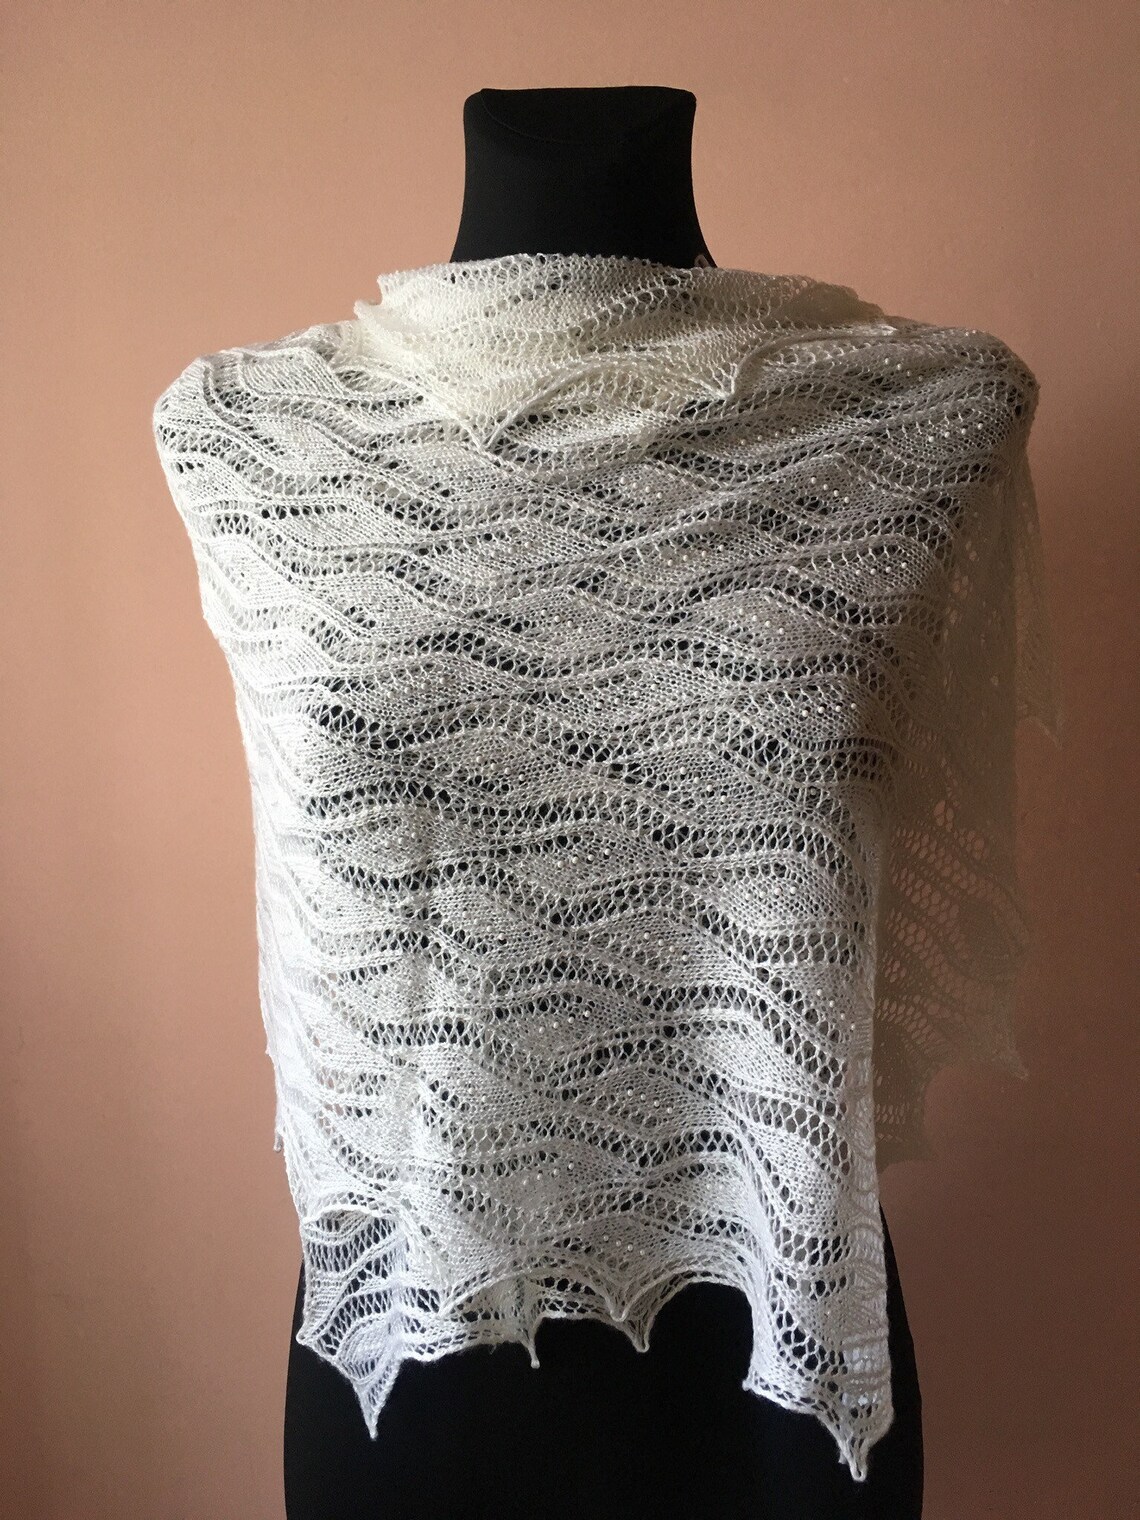 Haapsalu lace shawl with beads | Etsy